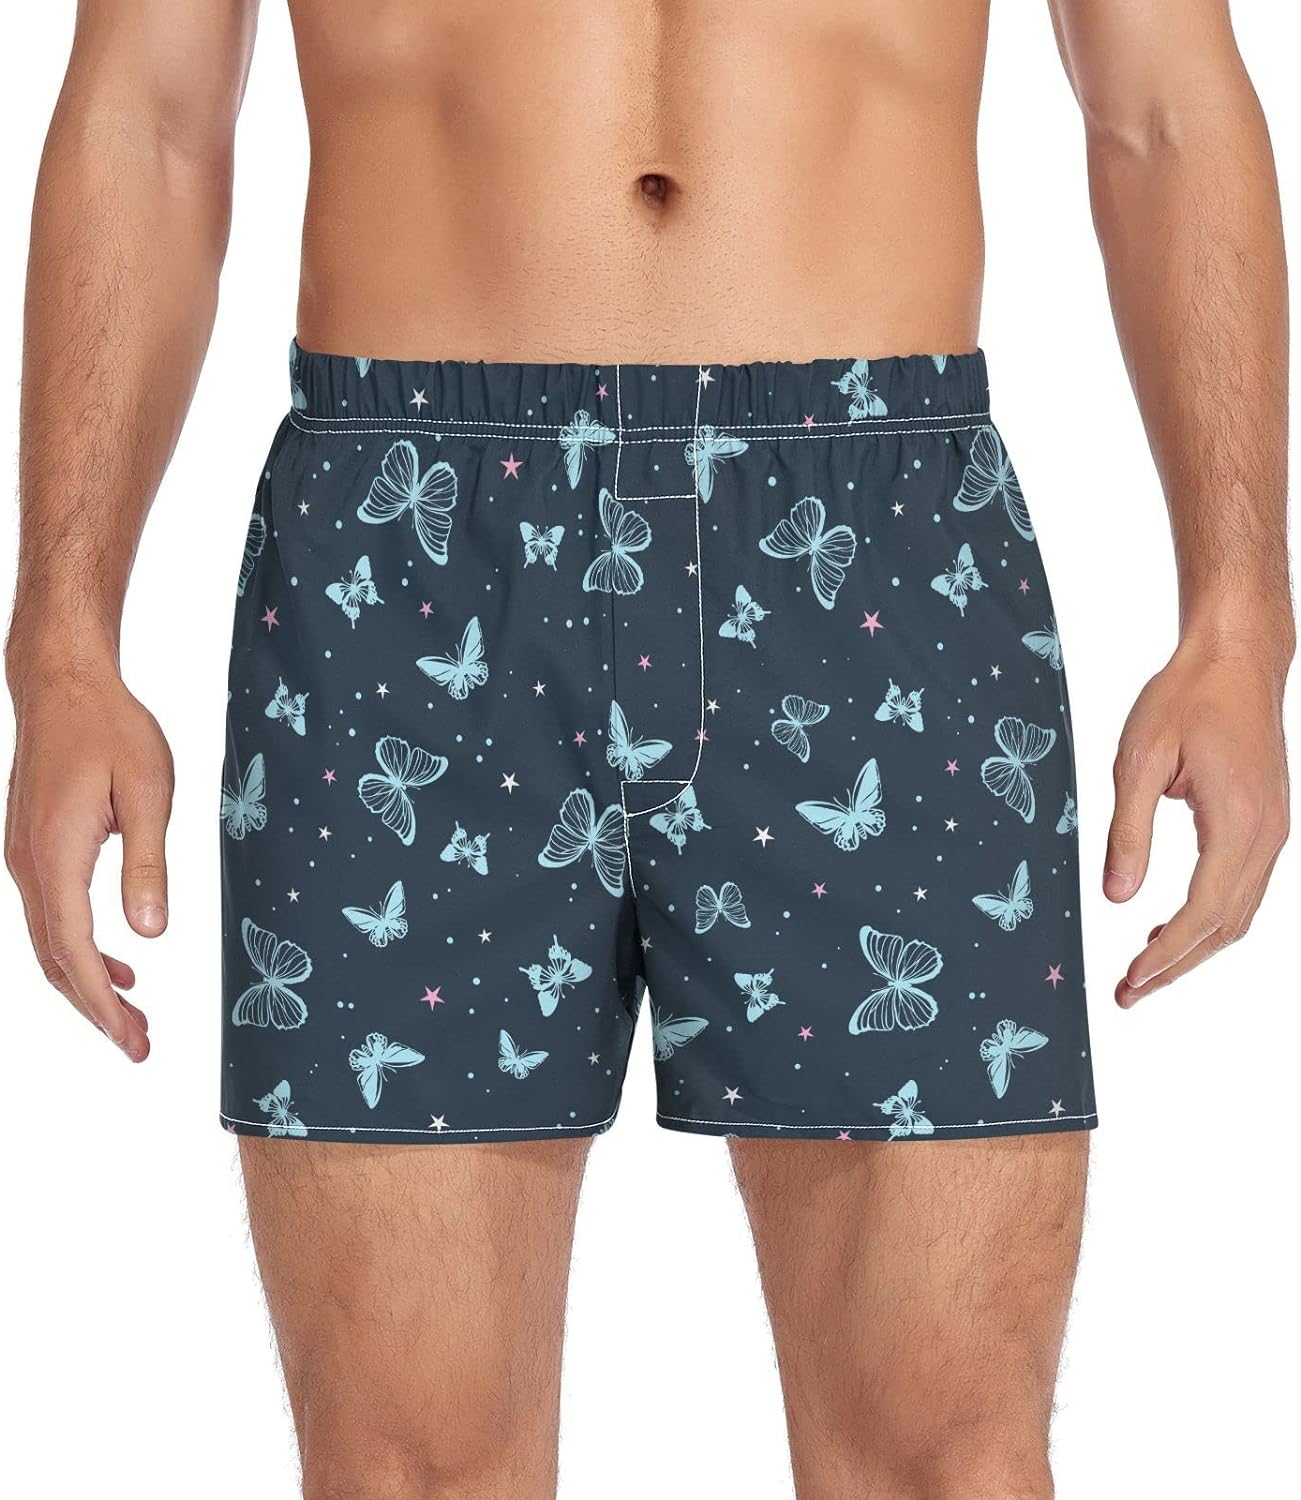 Men's Boxer Shorts, Men's Underwear